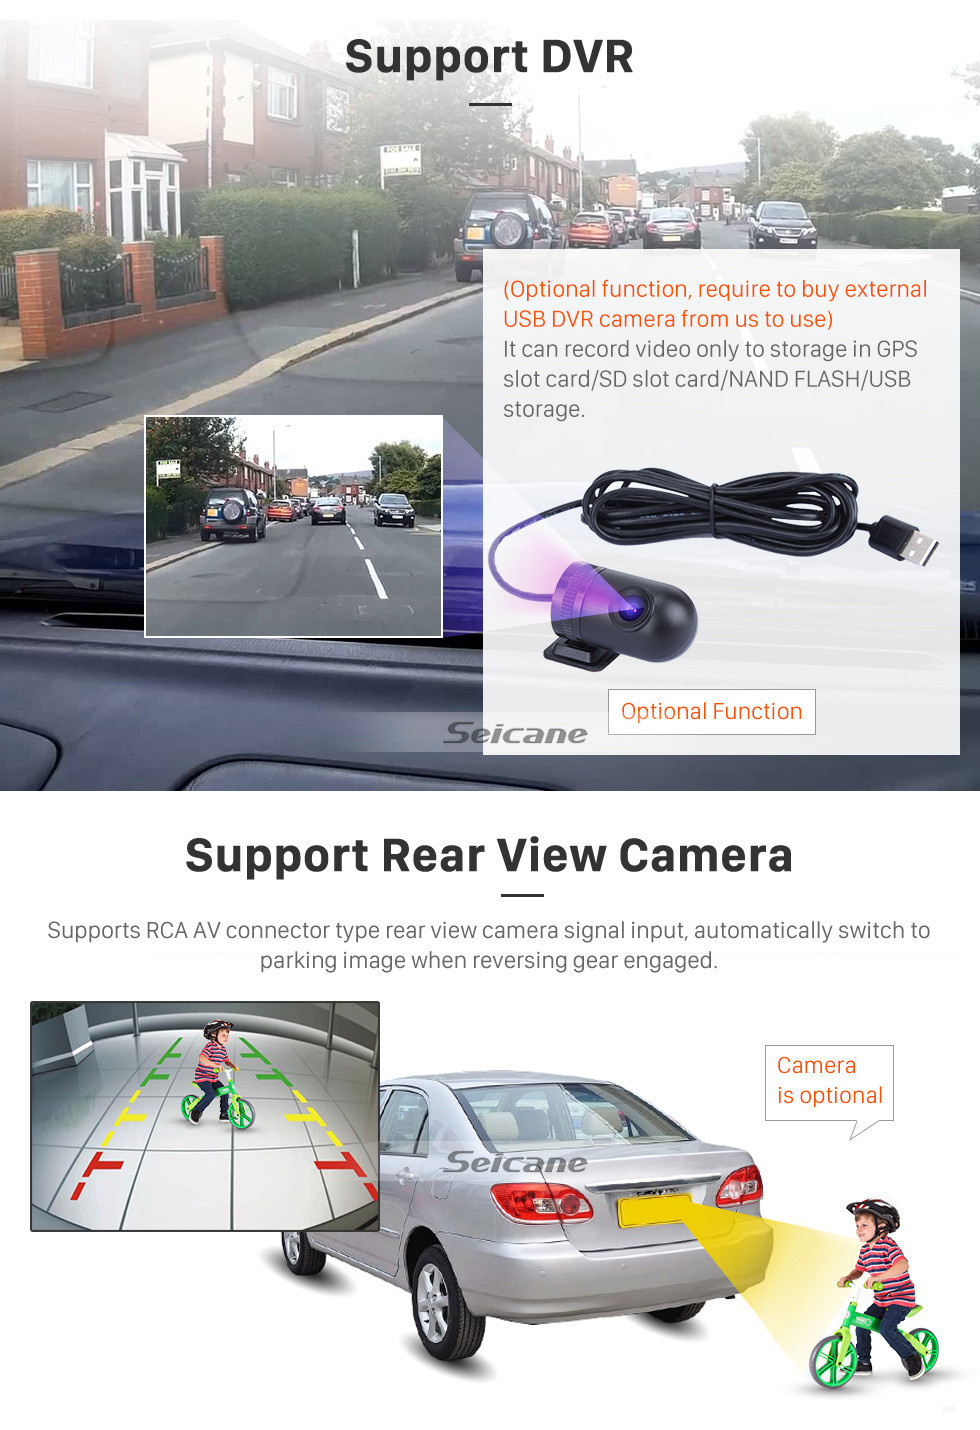 Seicane HD Touchscreen For 2010 2011 2012-2015 Nissan Navara Radio Android 11.0 9 inch GPS Navigation Bluetooth Carplay support TPMS Backup camera